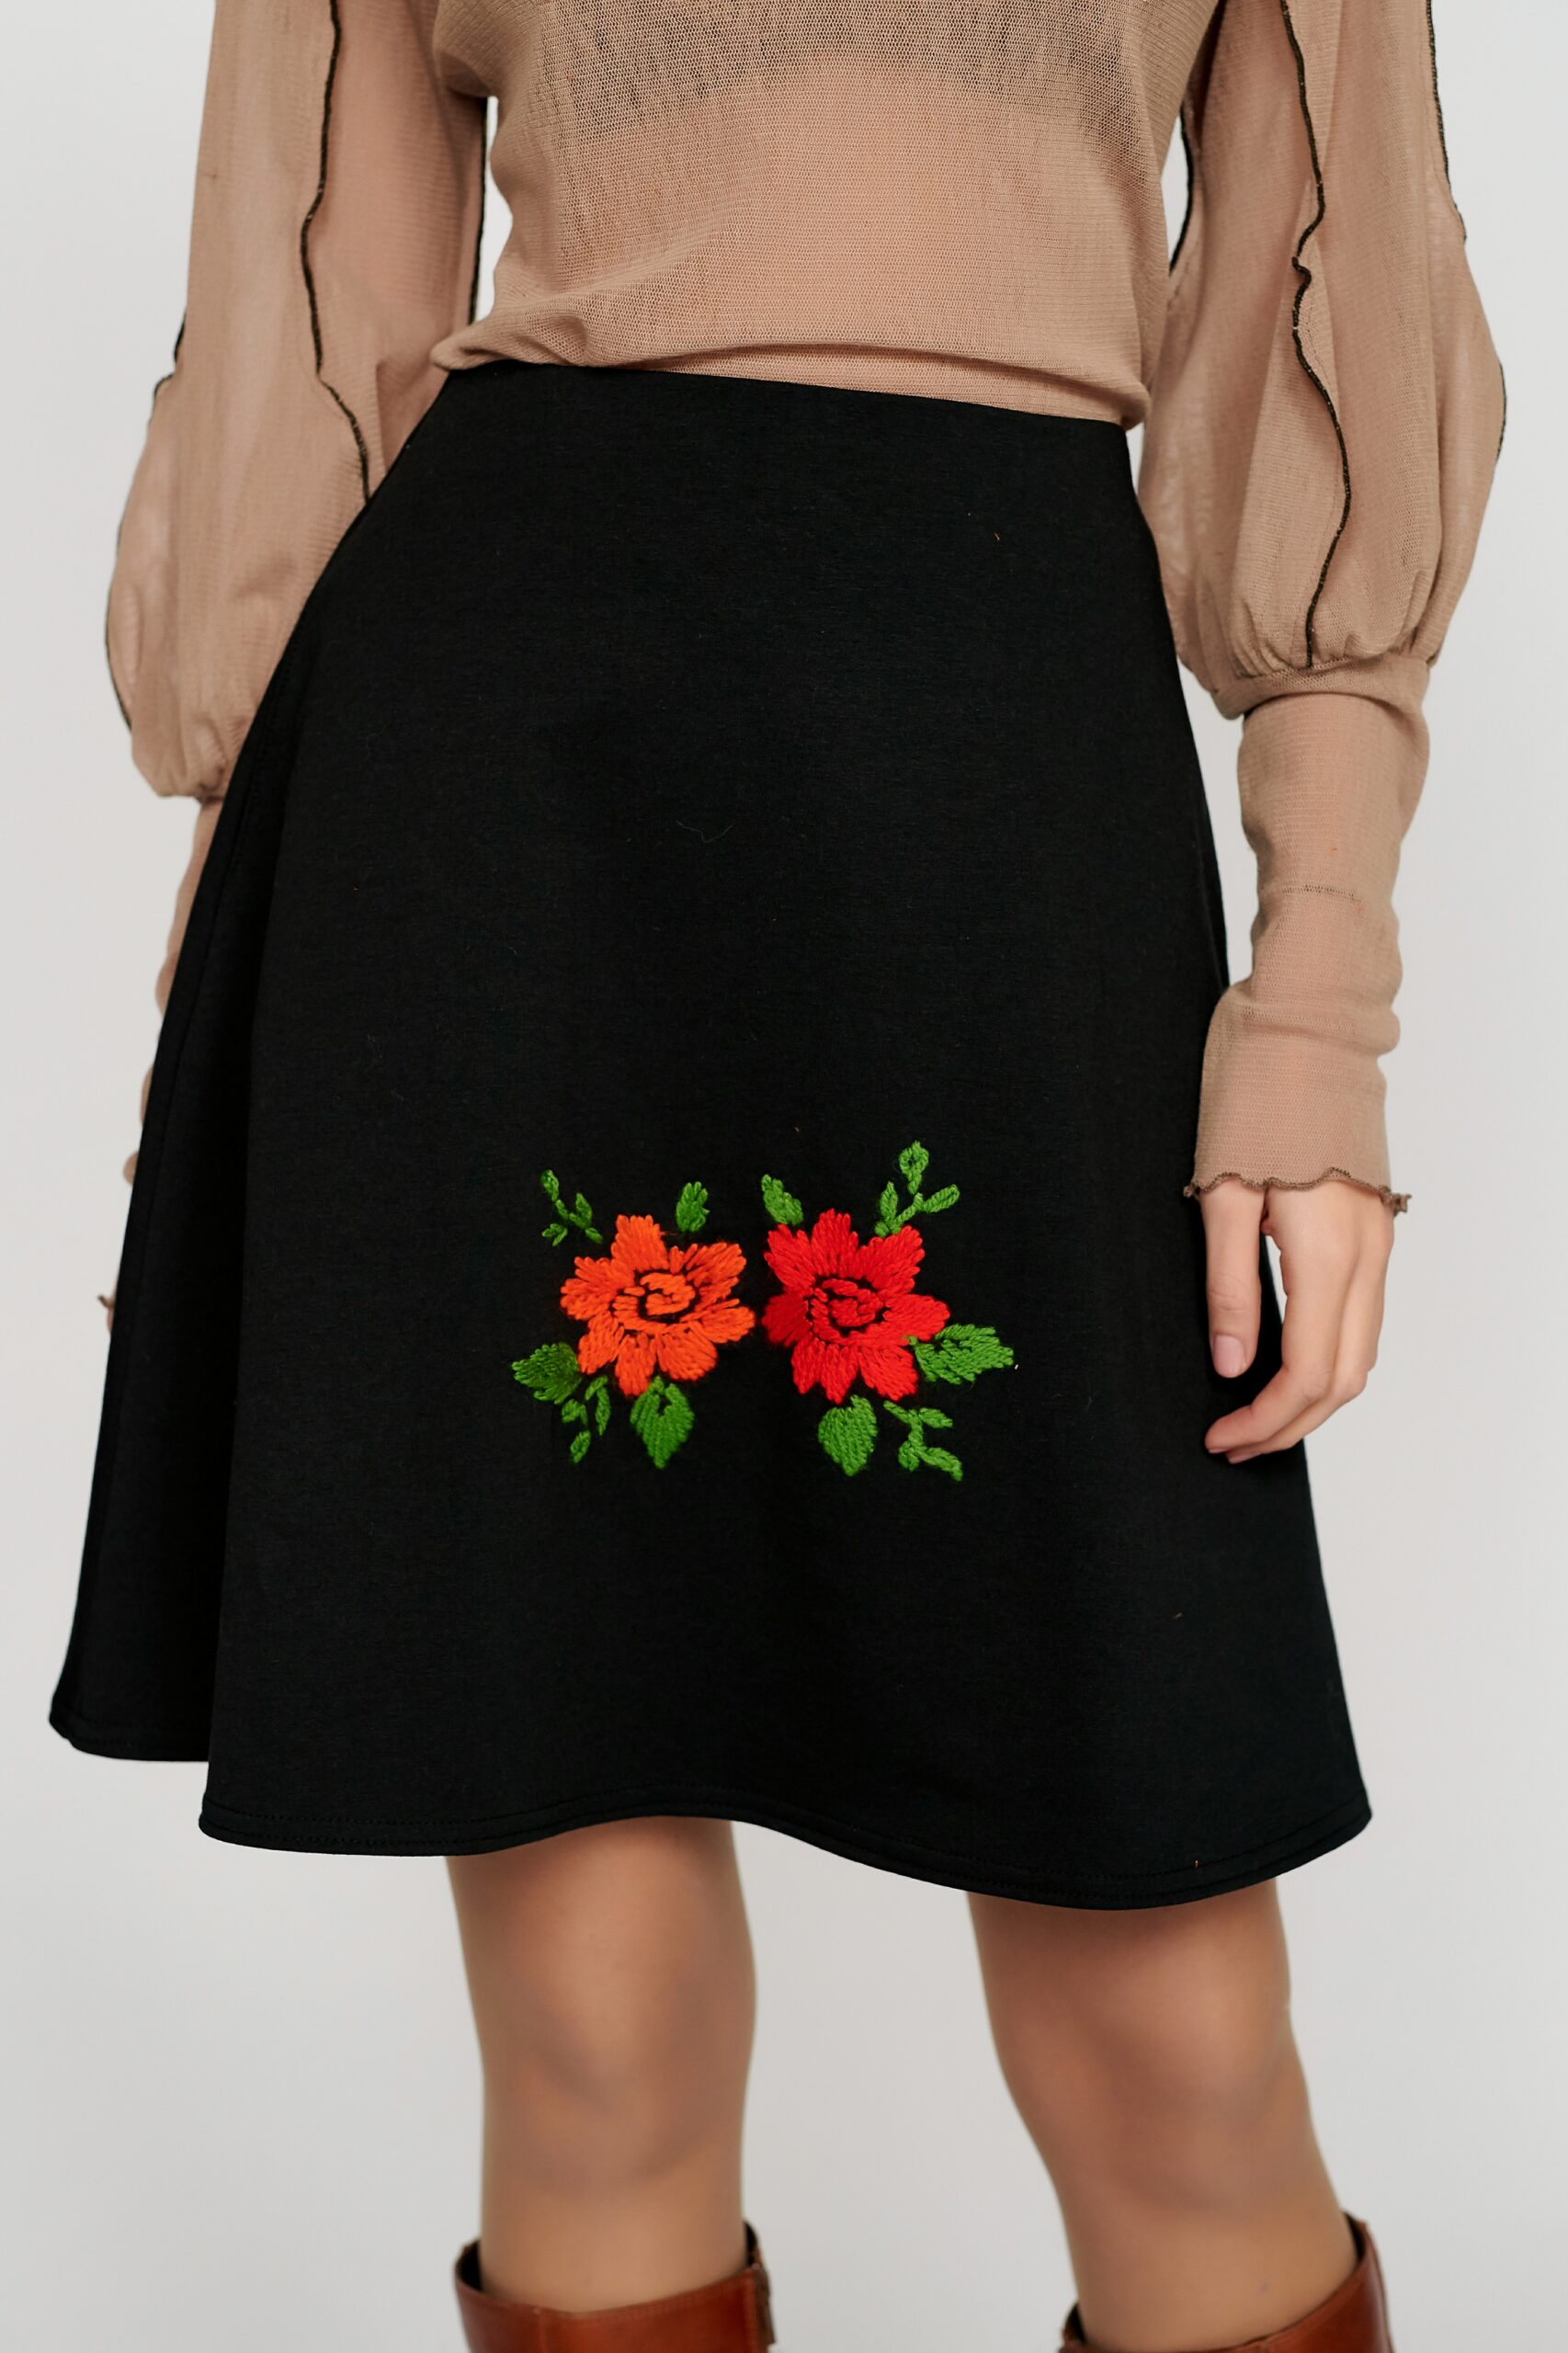 Skirt IRMA. Natural fabrics, original design, handmade embroidery